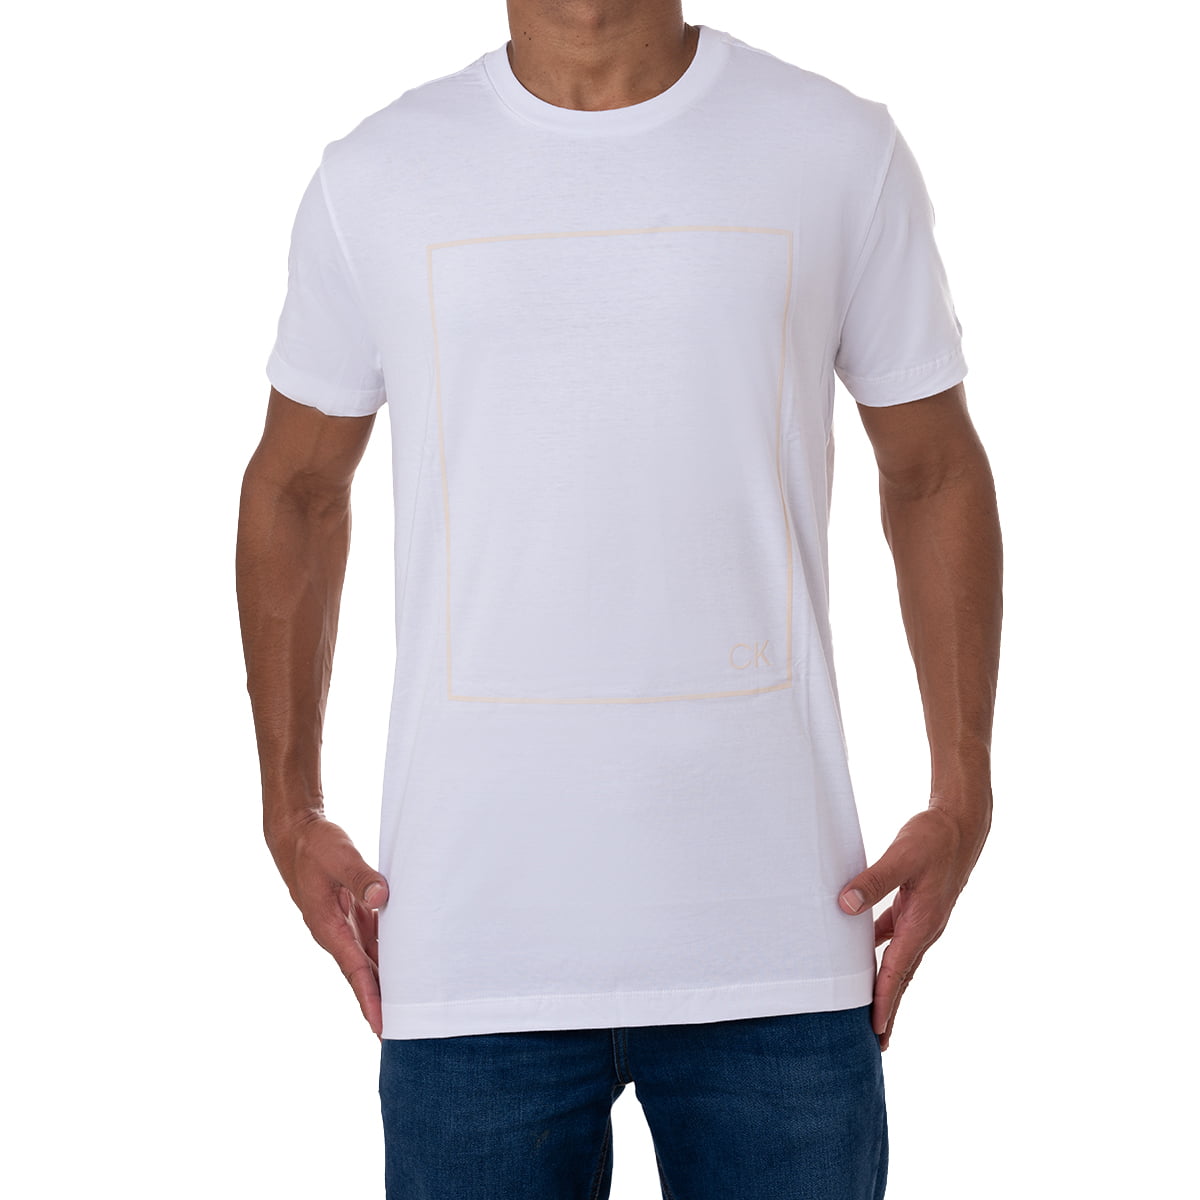 Camiseta Masculina Branca CK Relevo